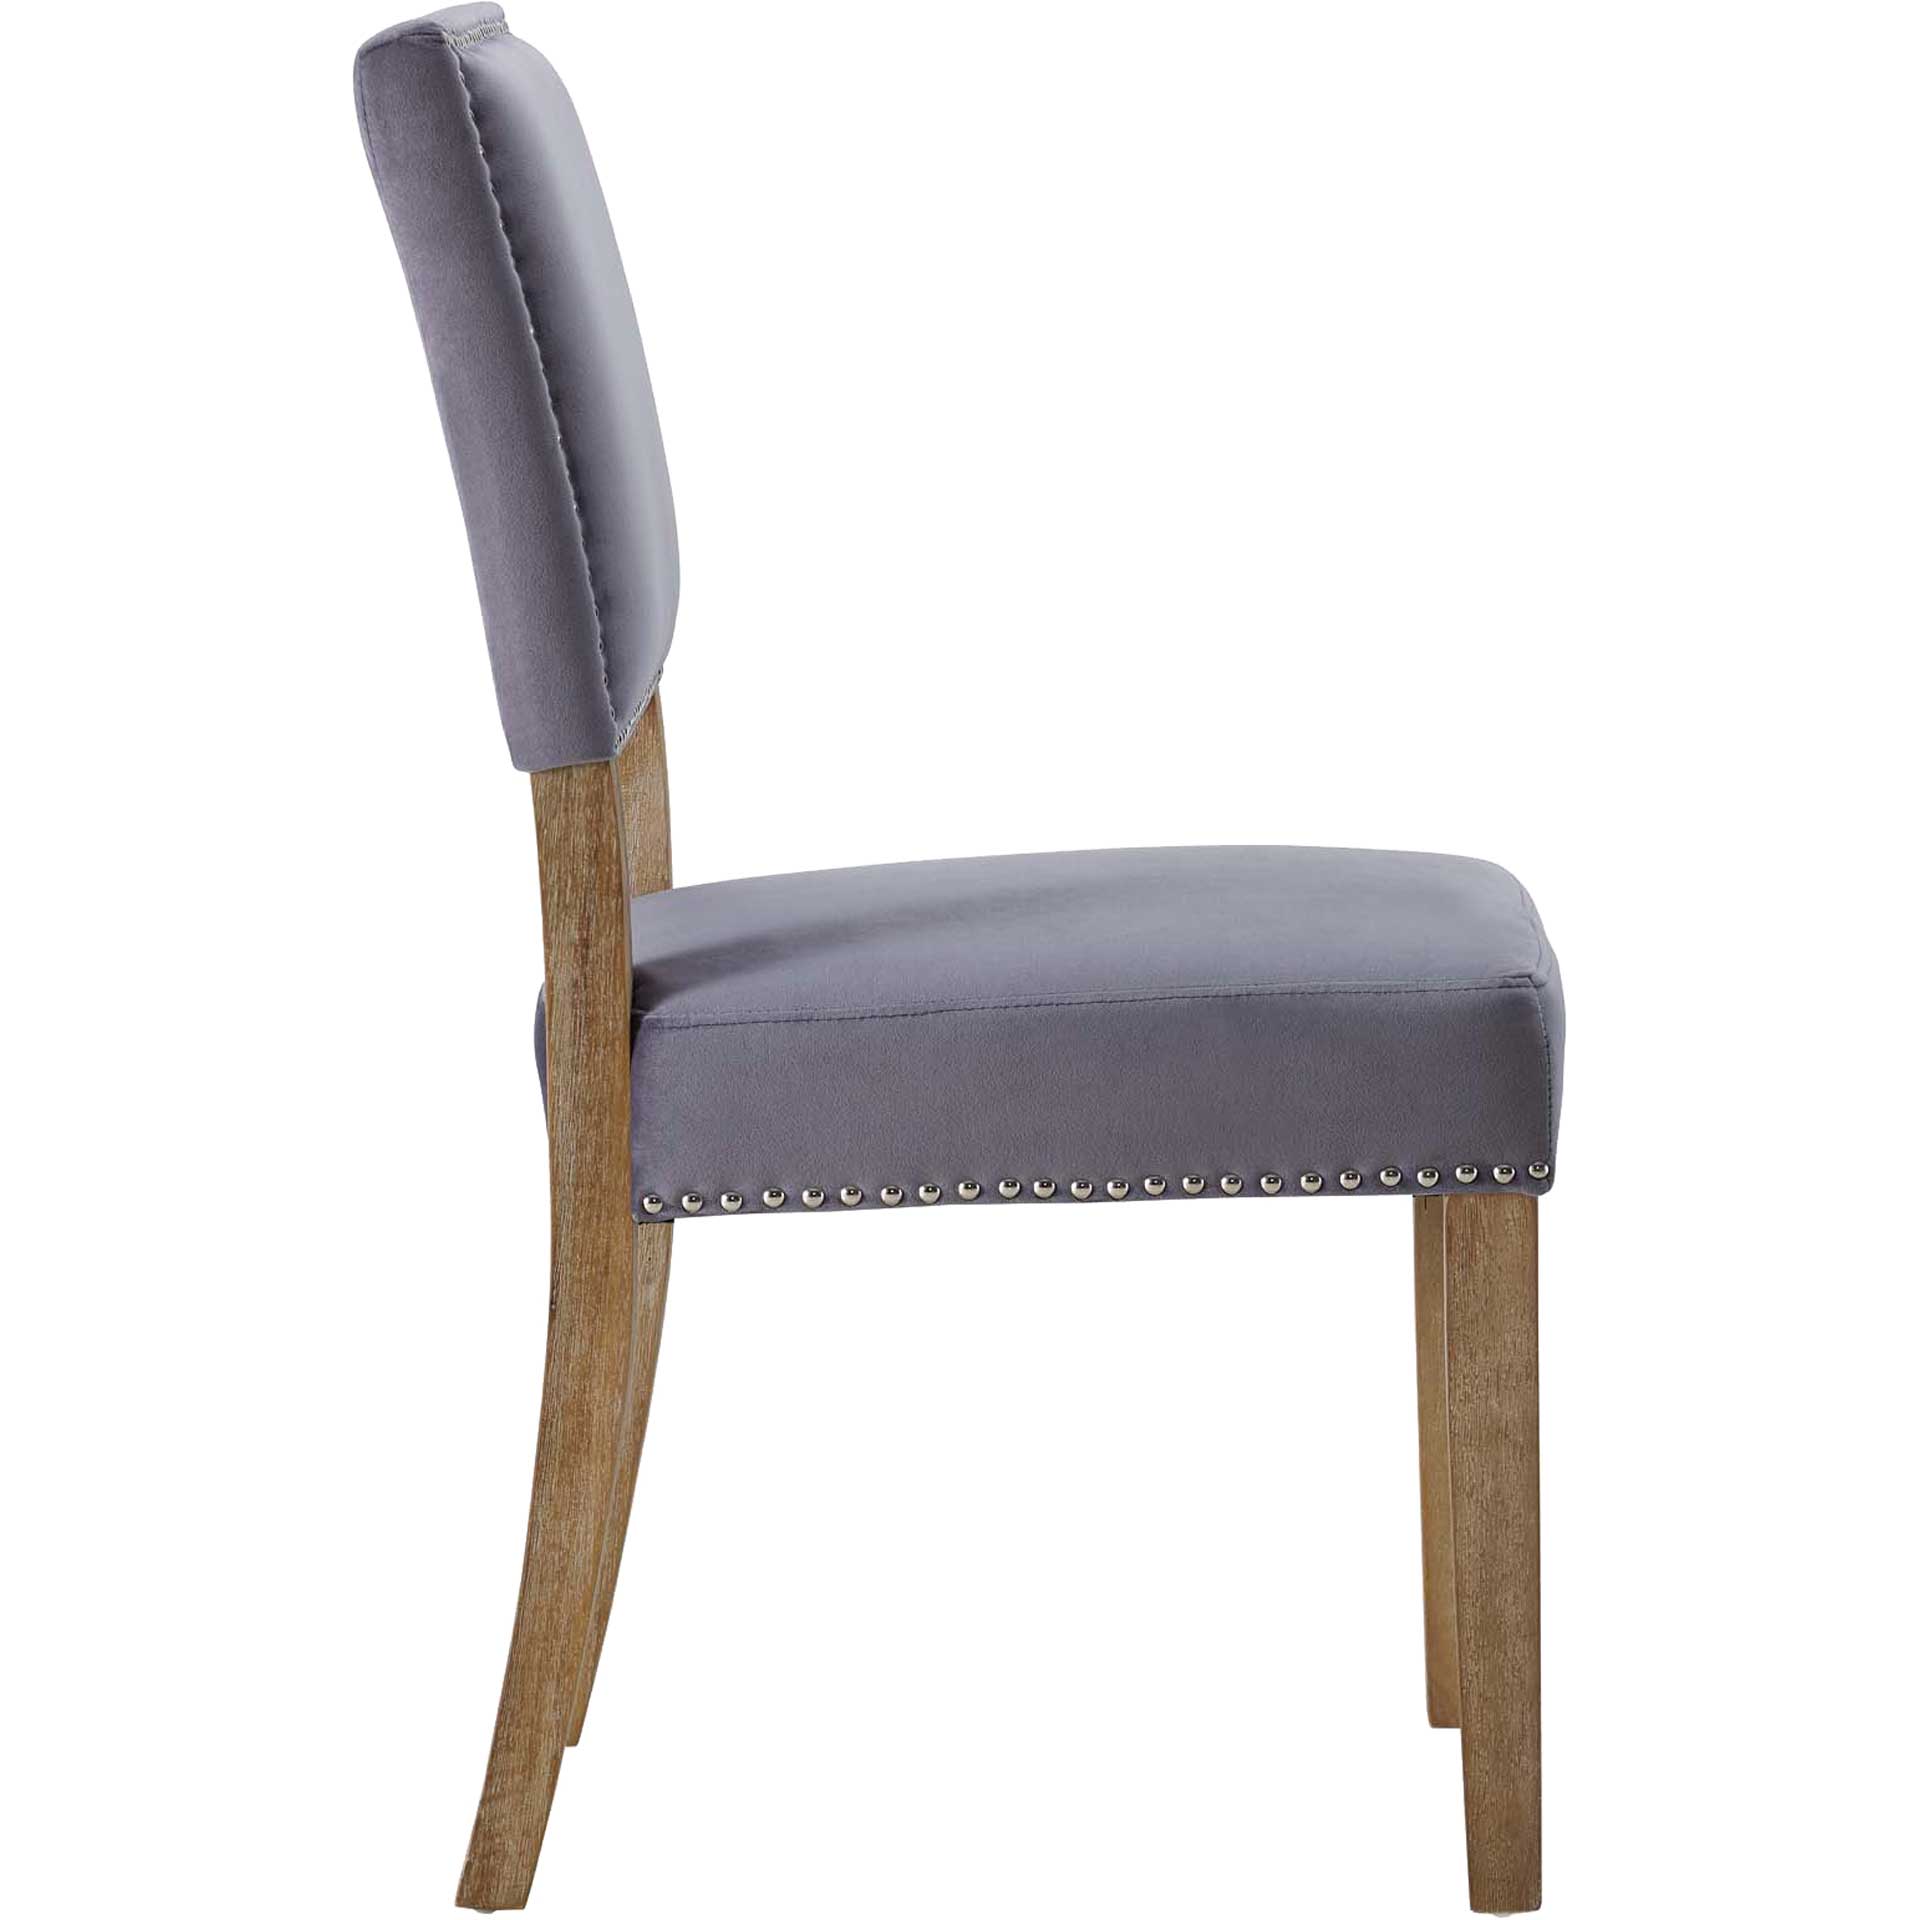 Orwen Wood Dining Chair Gray